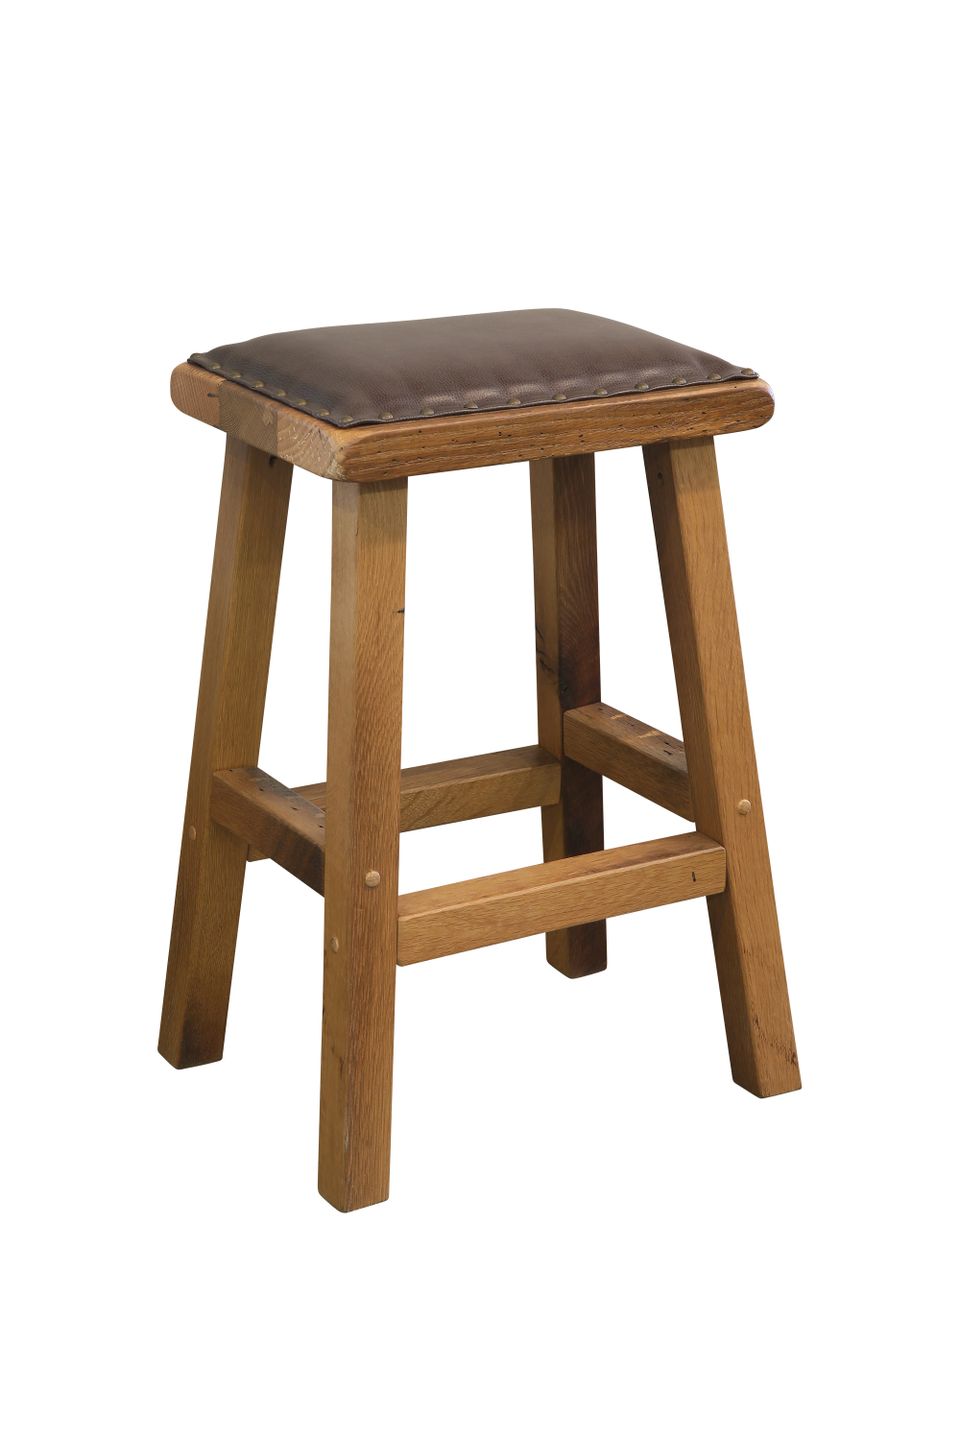 Ubw leather seat bar stool